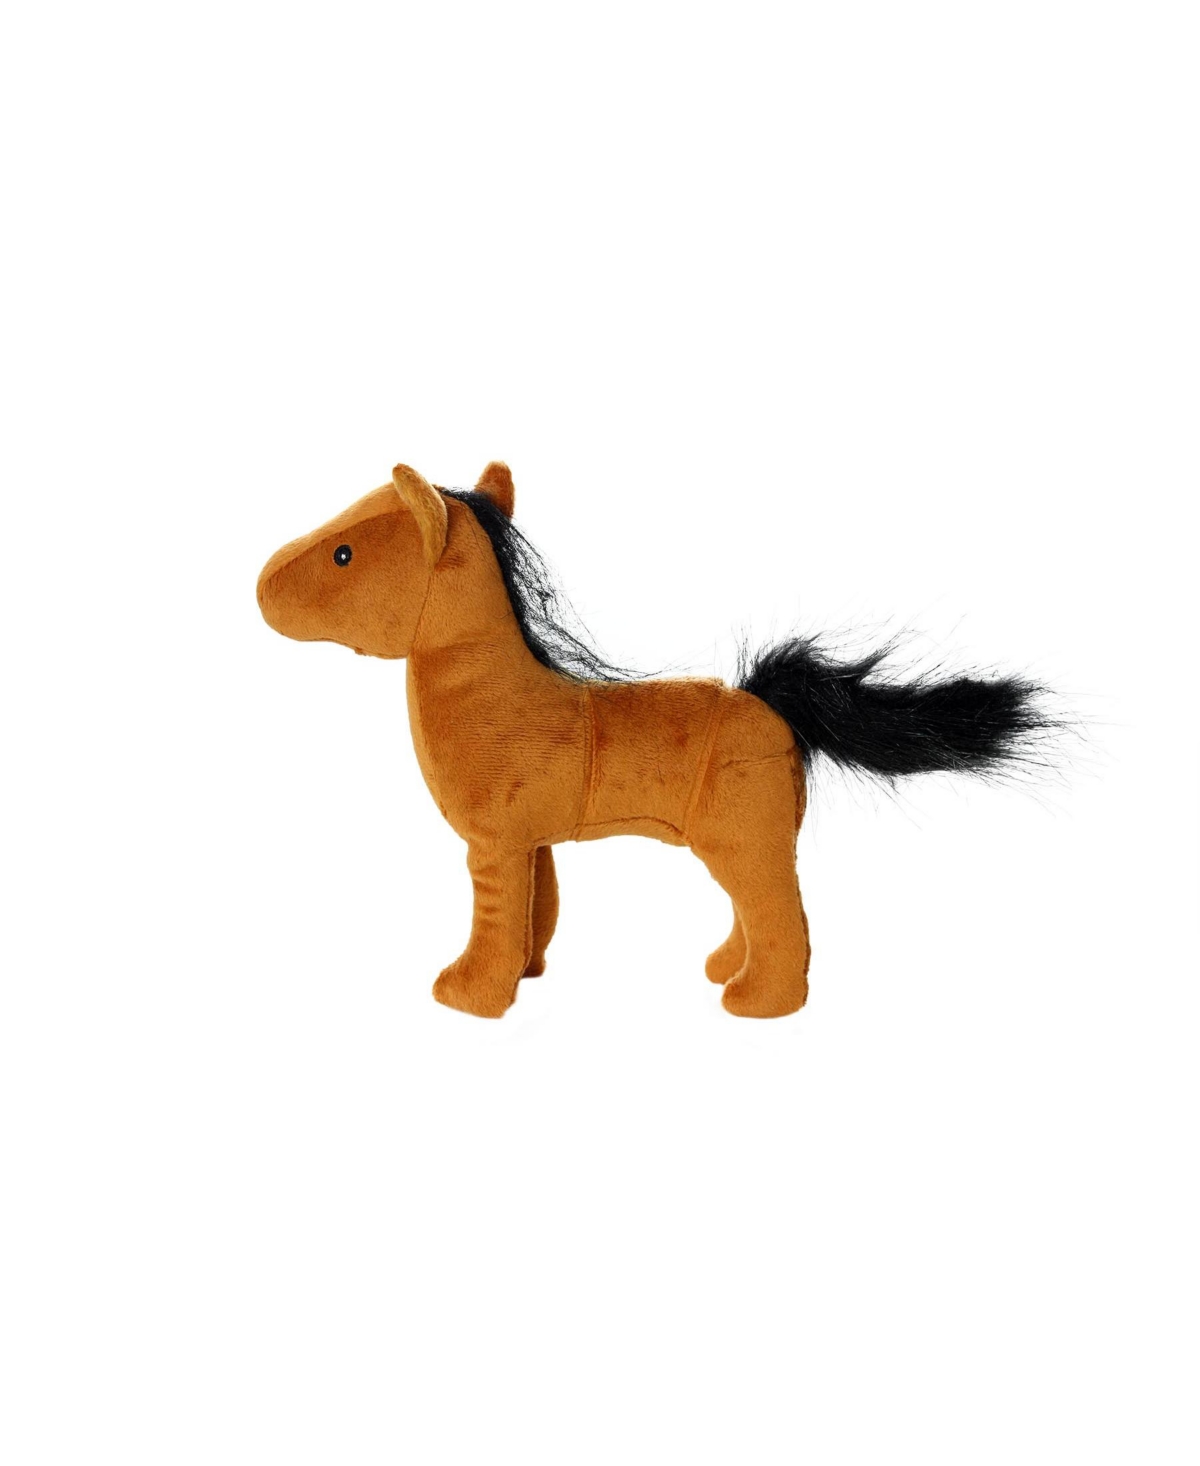 Jr Farm Horse, Dog Toy - Brown